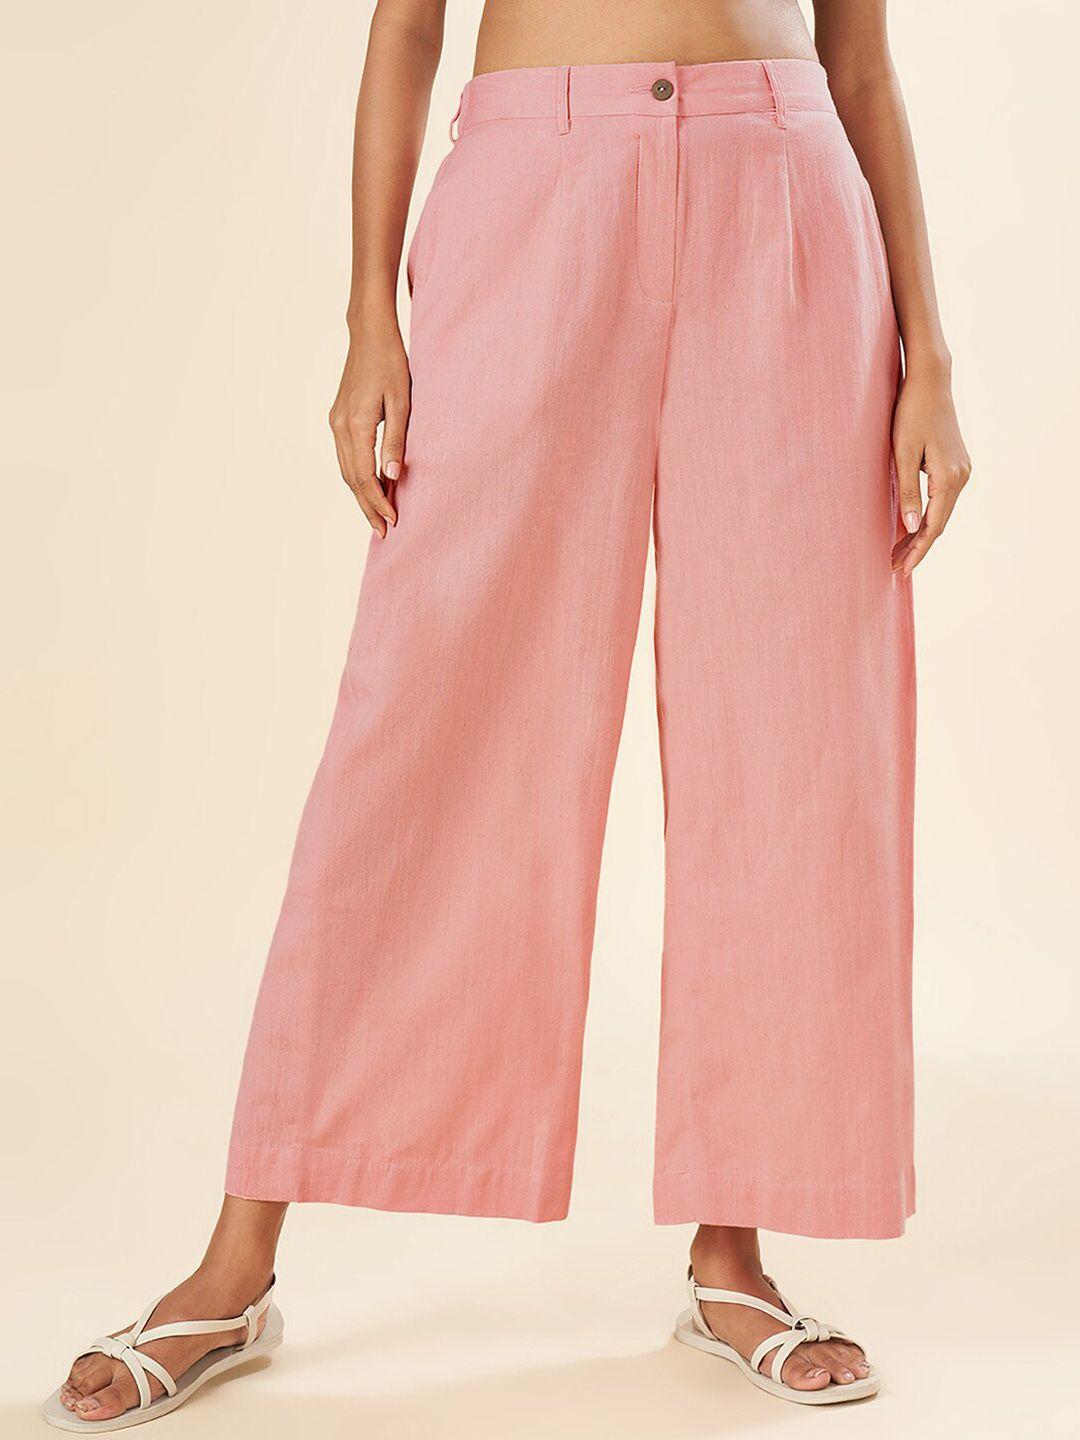 akkriti by pantaloons women mid-rise culottes trousers